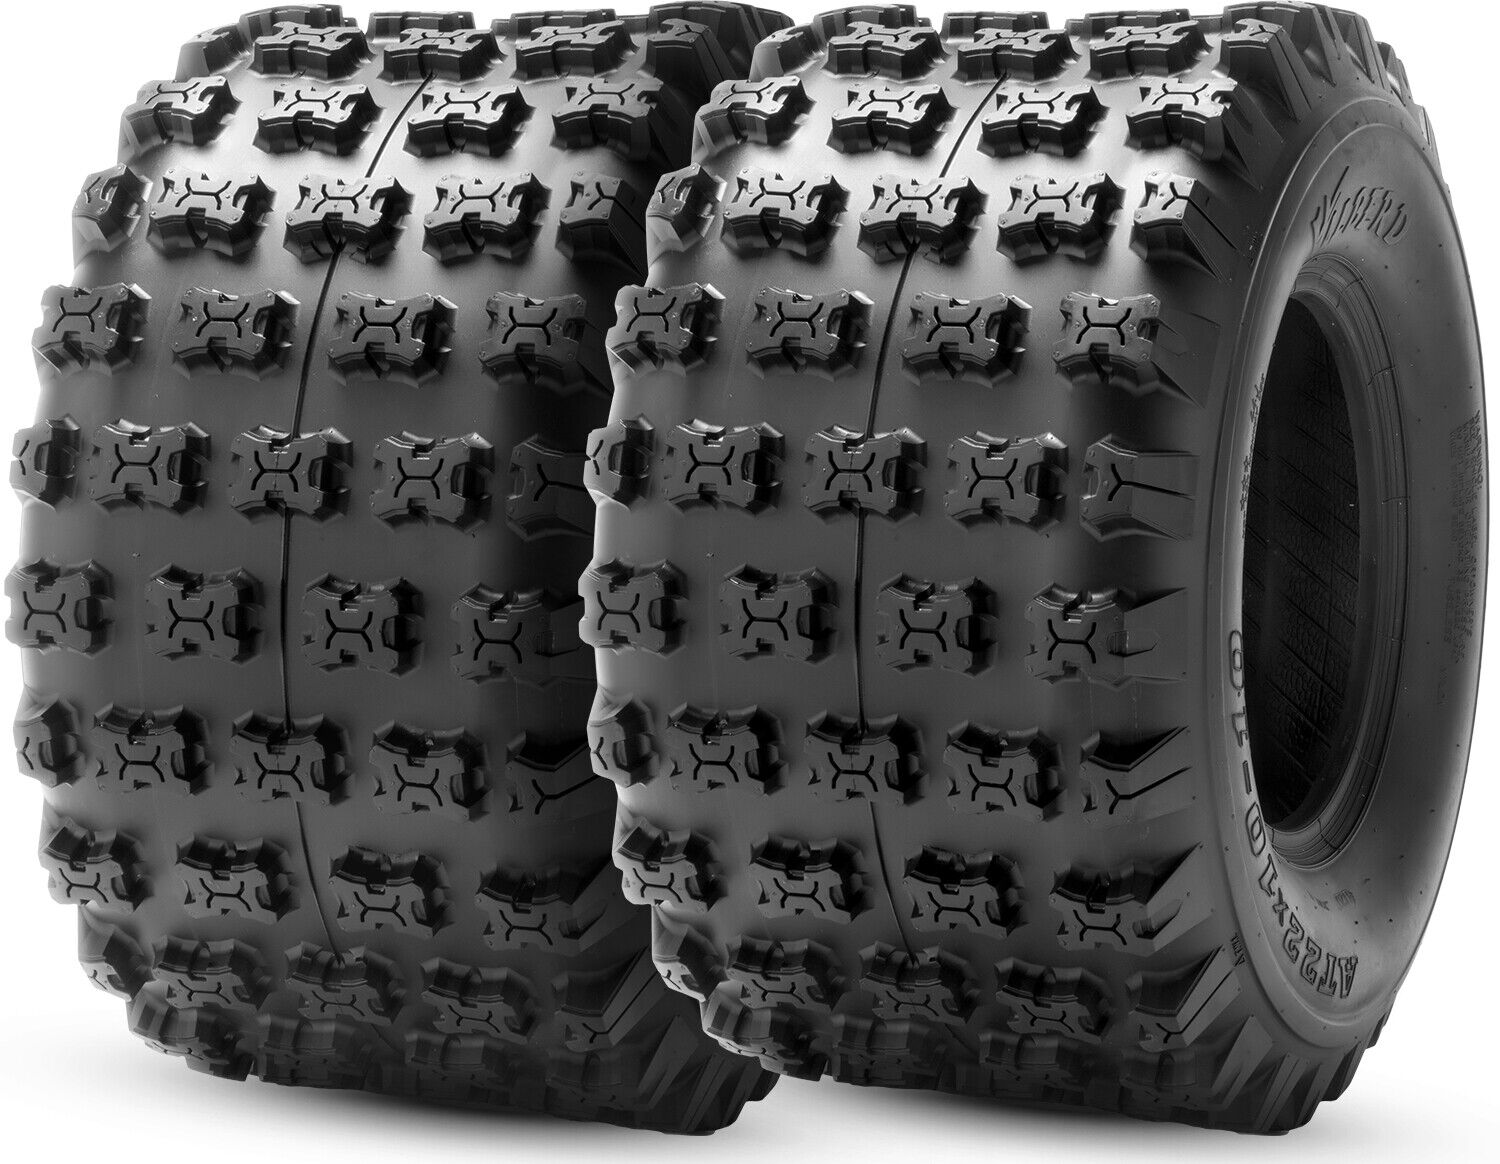 Set 2 20x11-10 Sport Quad ATV Tires 6Ply 20x11x10 Heavy Duty Tubeless Rear Tires